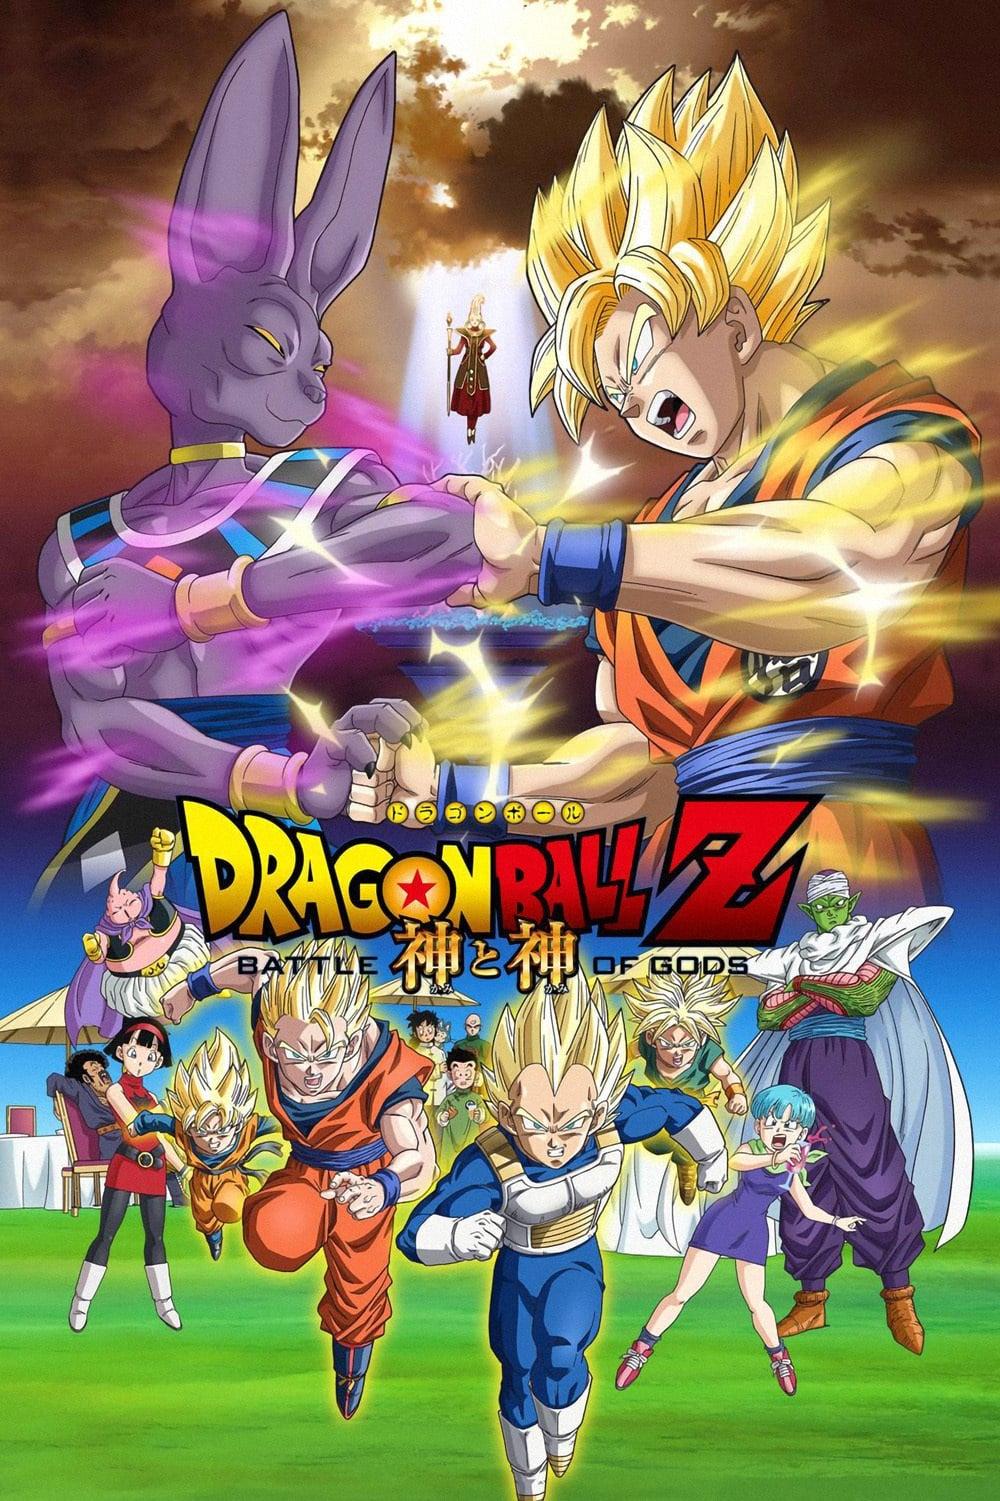 Dragonball Z 14: Kampf der Götter poster